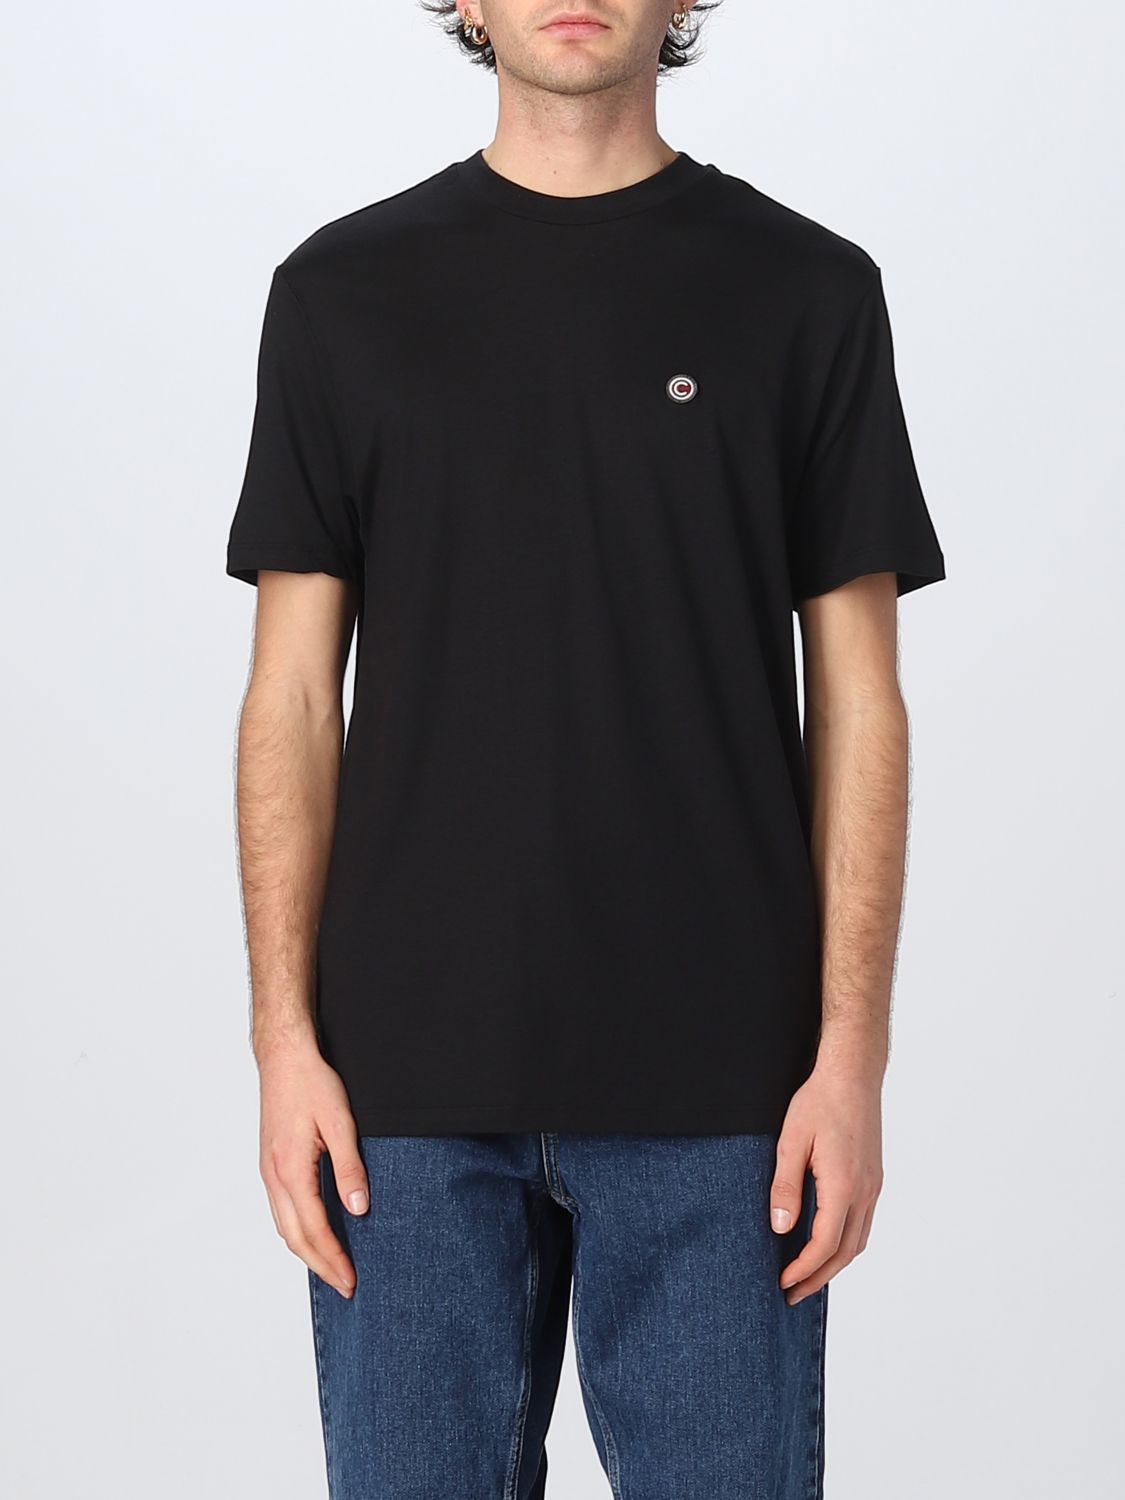 COLMAR: t-shirt for man - Black | Colmar t-shirt 75798WS online on ...